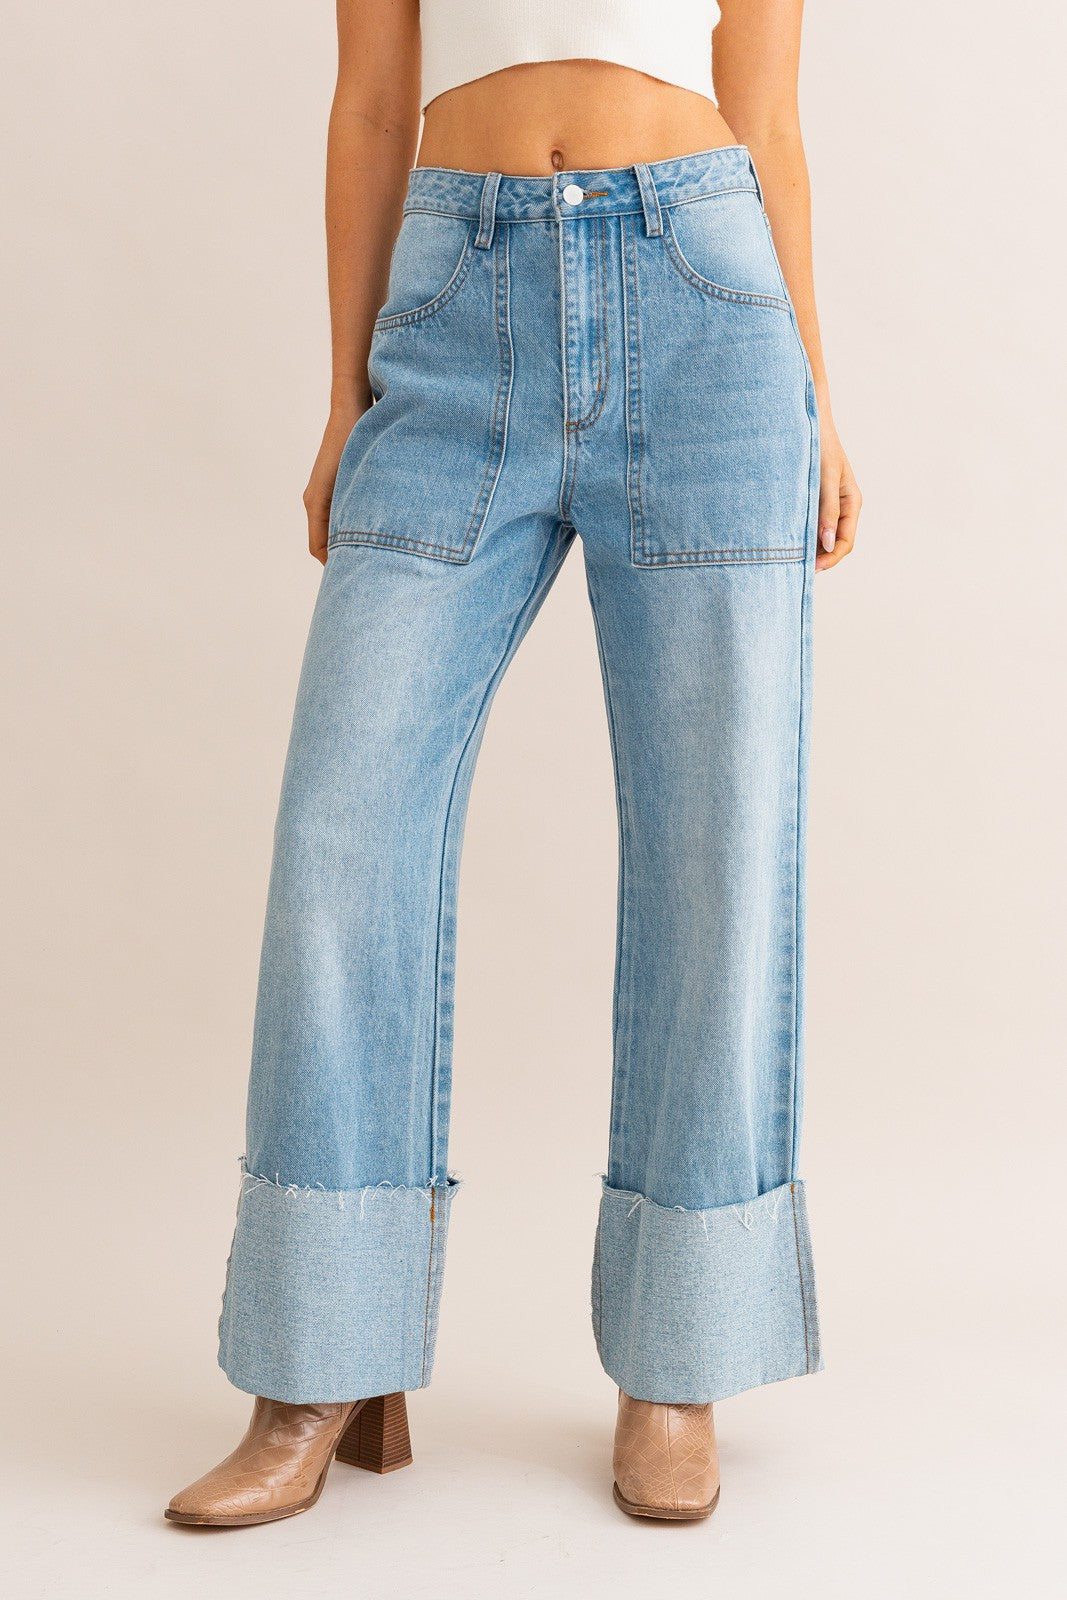 Western inspired high waist wide leg cuffed jeans